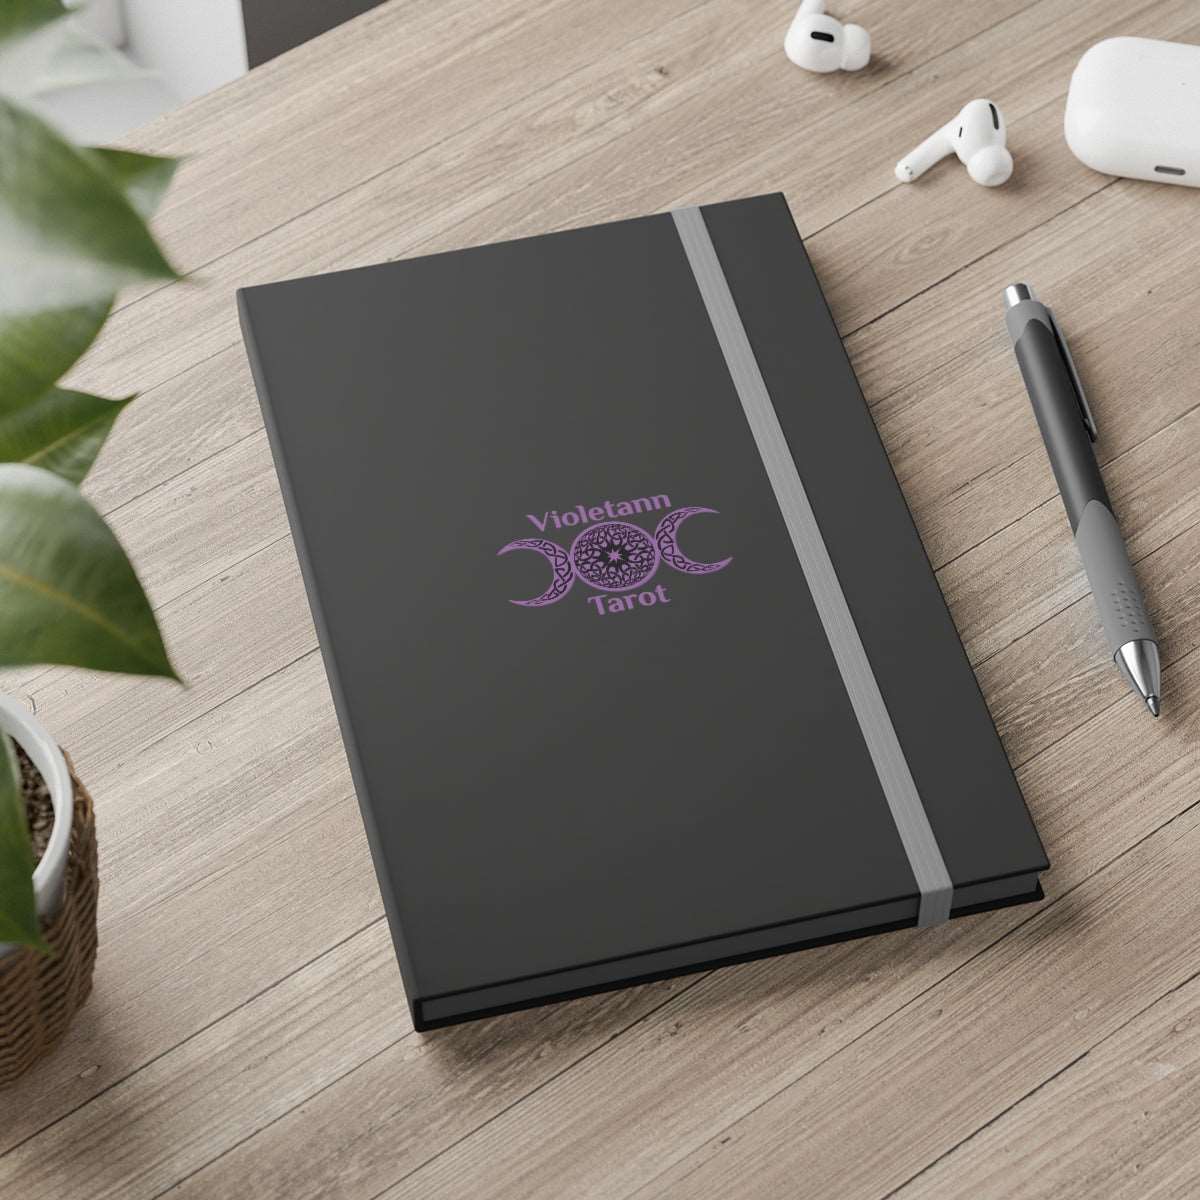 Violetann Tarot Logo - Color Contrast Notebook - Ruled